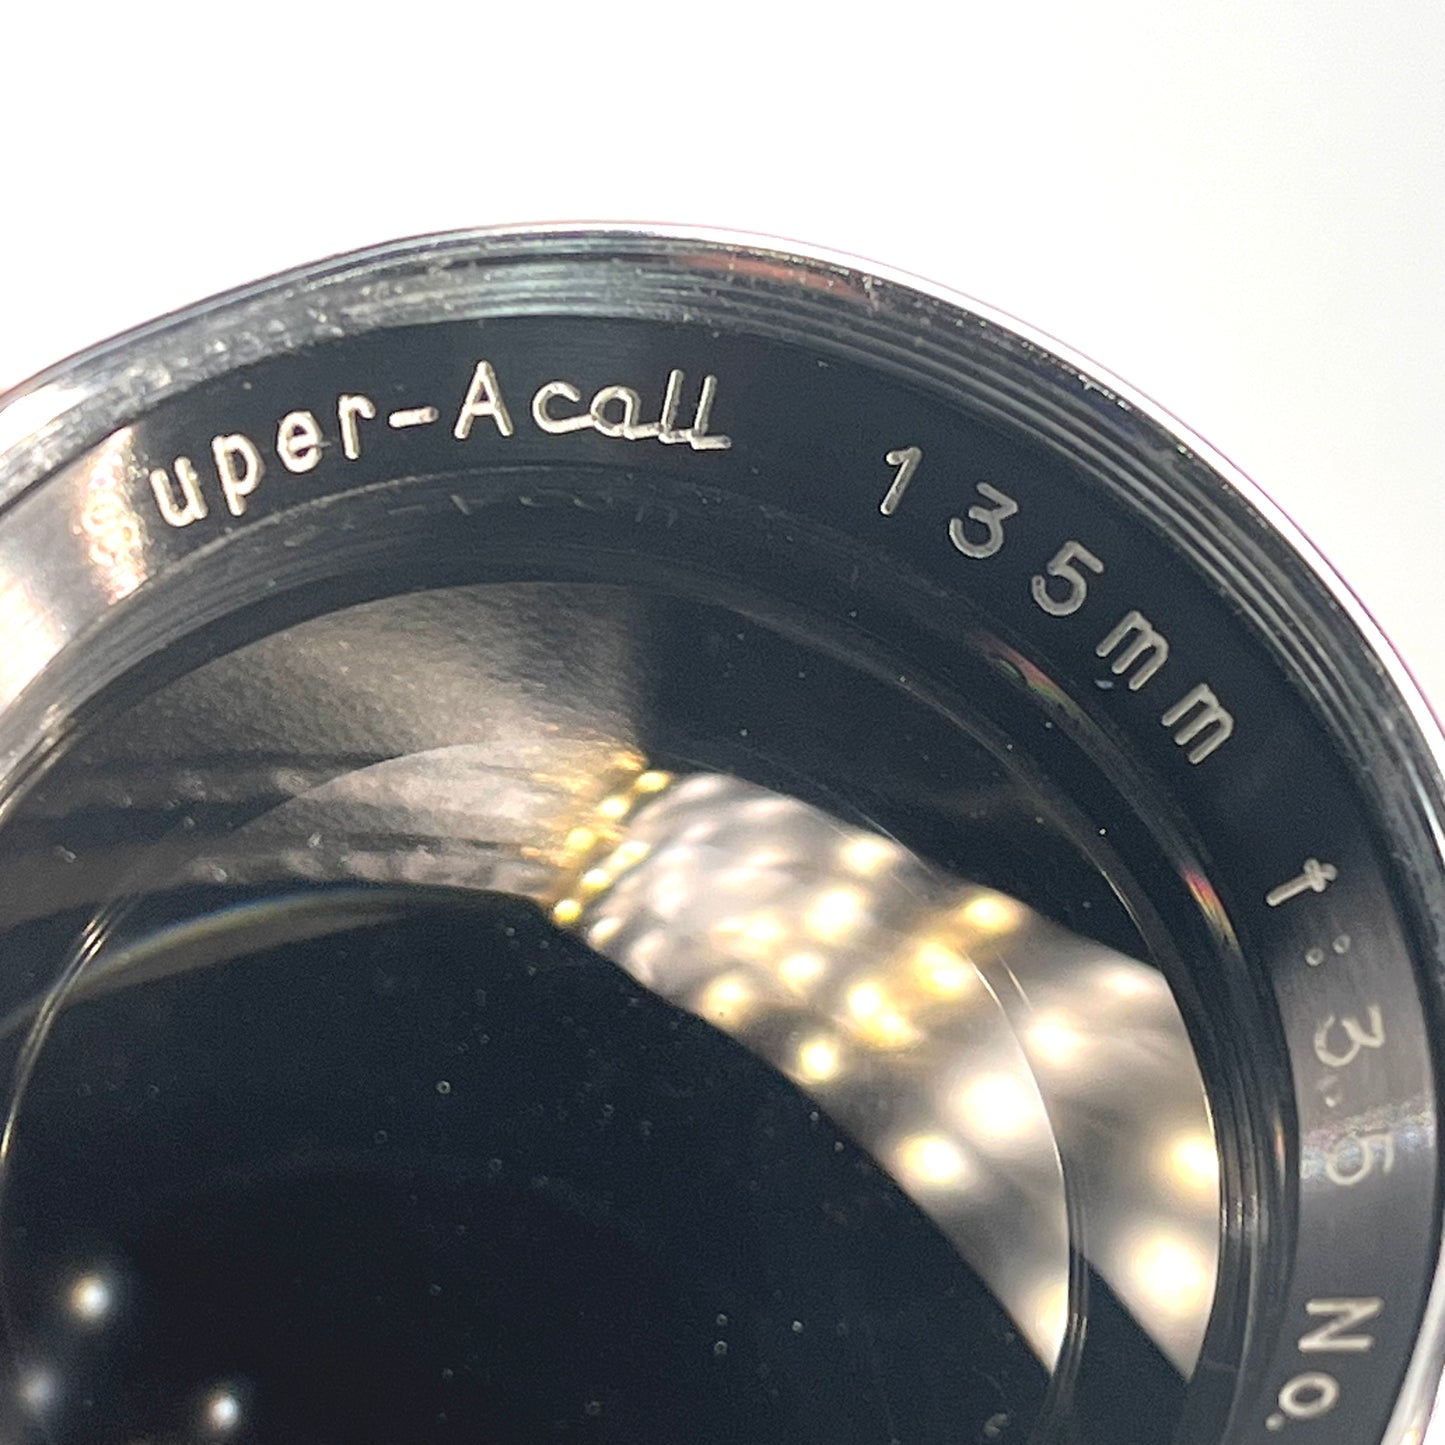 Kyoei optical co Super A call 135mm f3.5 m39